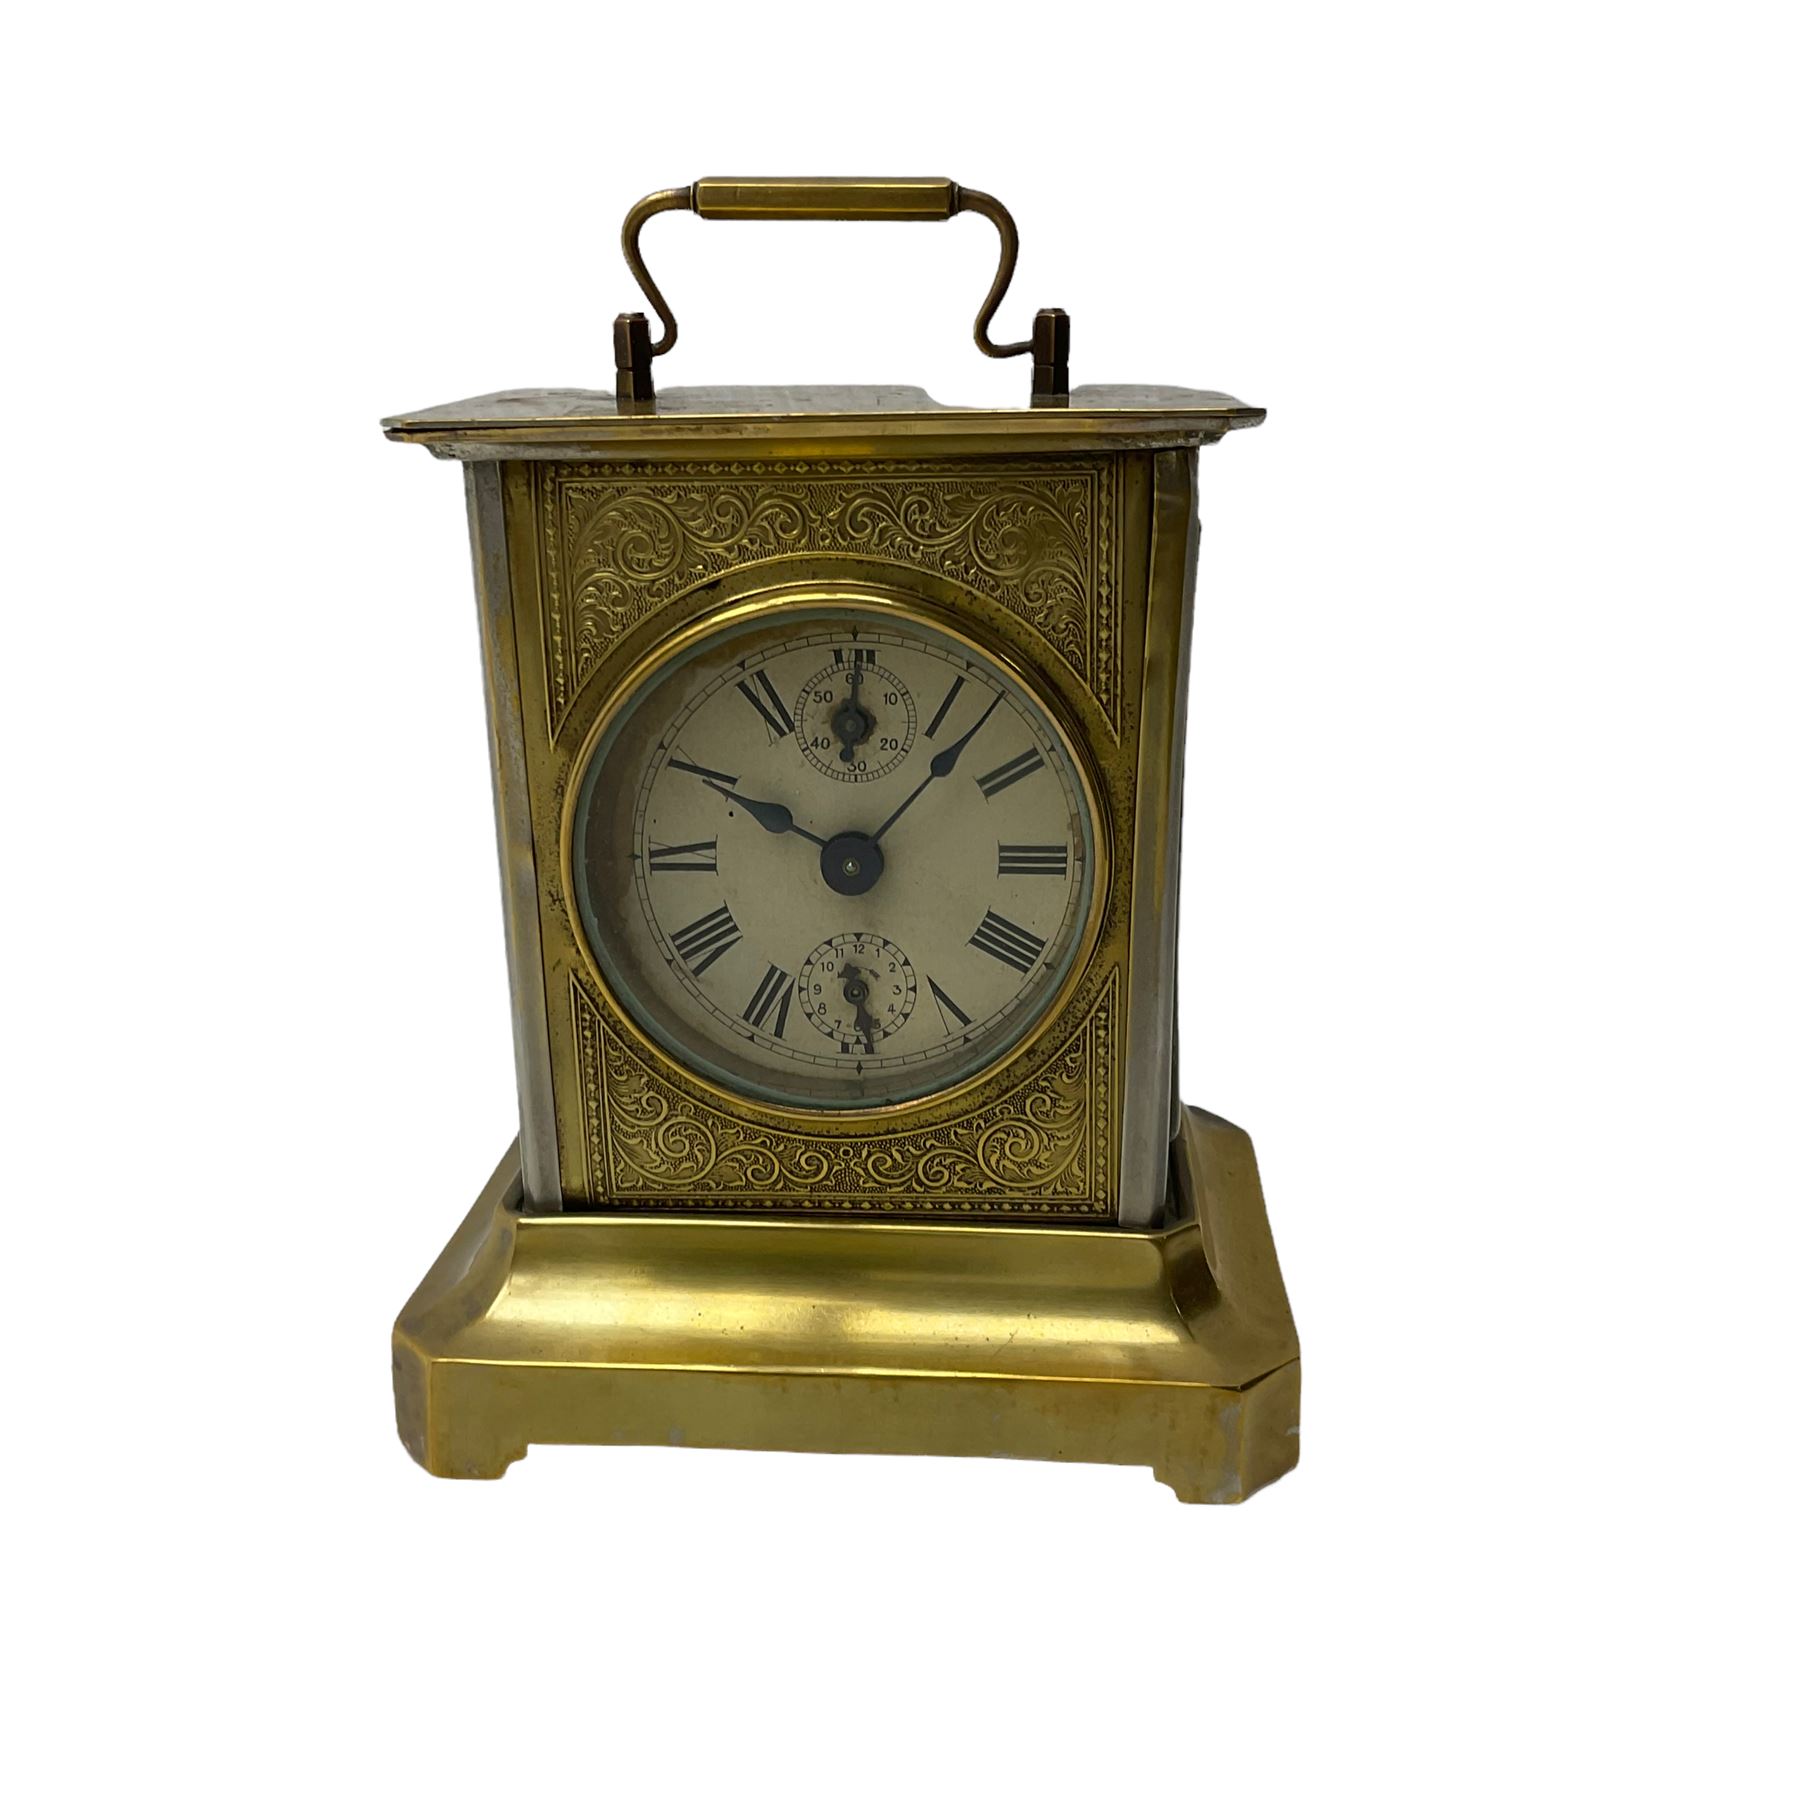 A German Juhngans �Joker� carriage clock with a musical alarm c1890